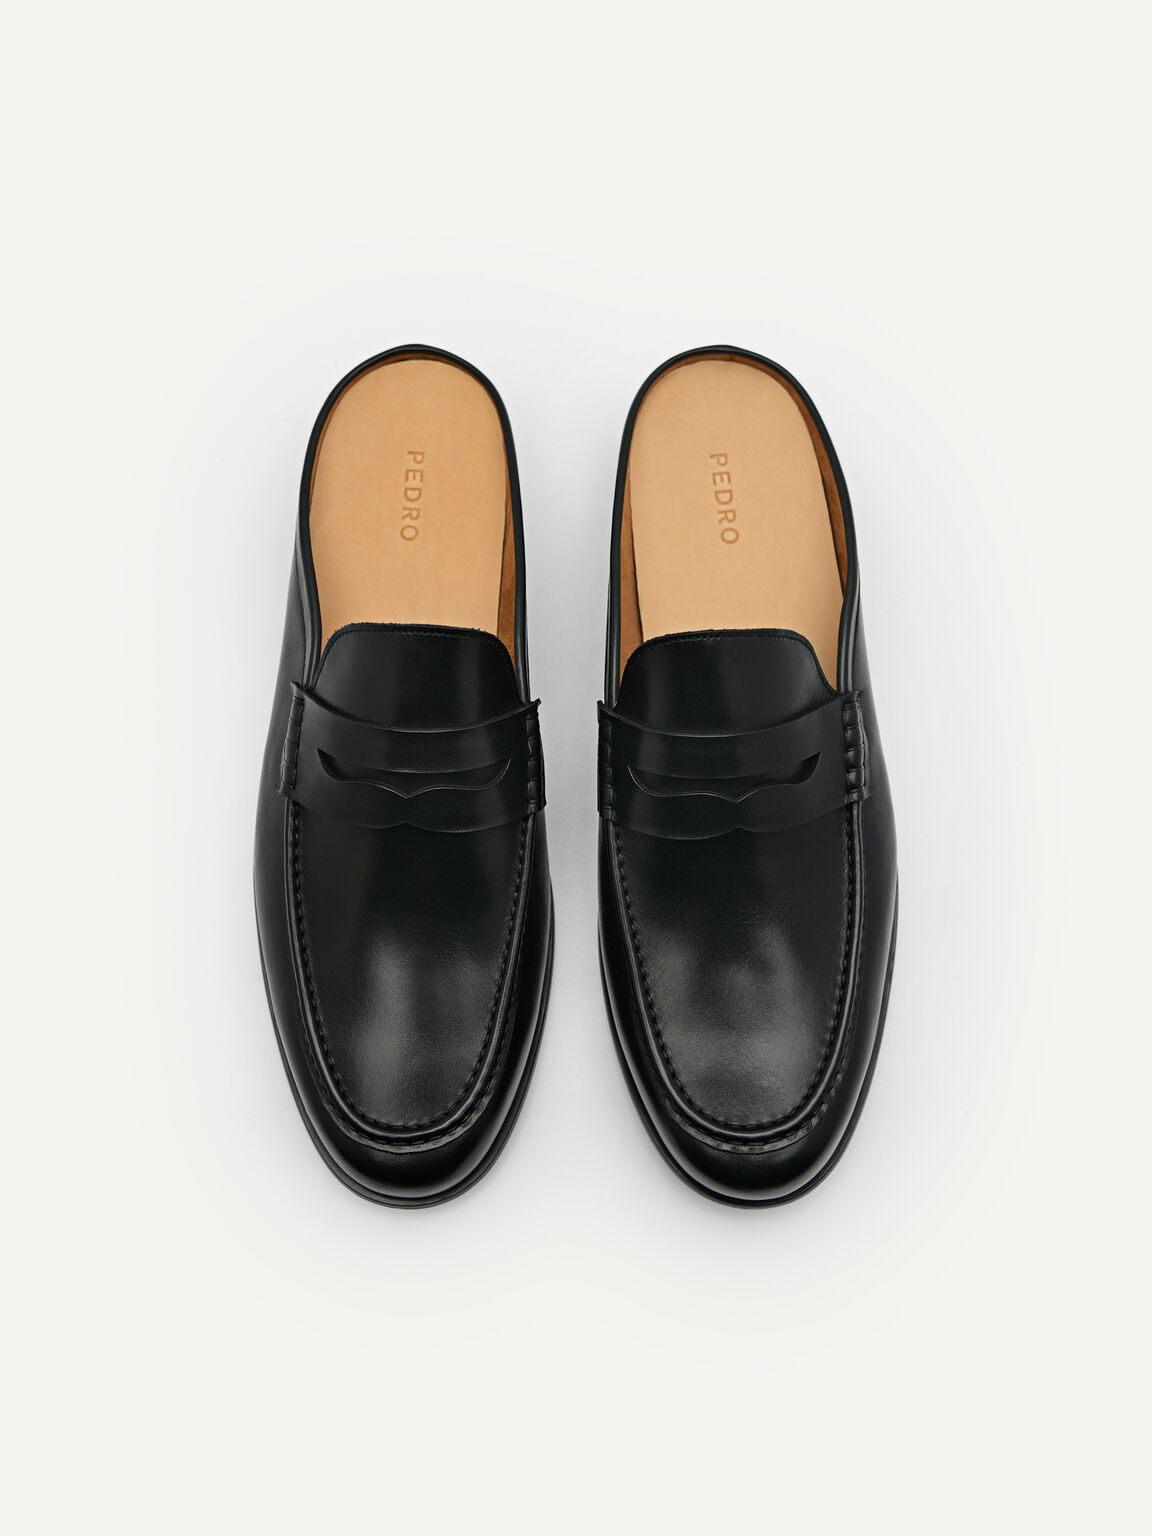 Blake Leather Slip-On Loafers, Black